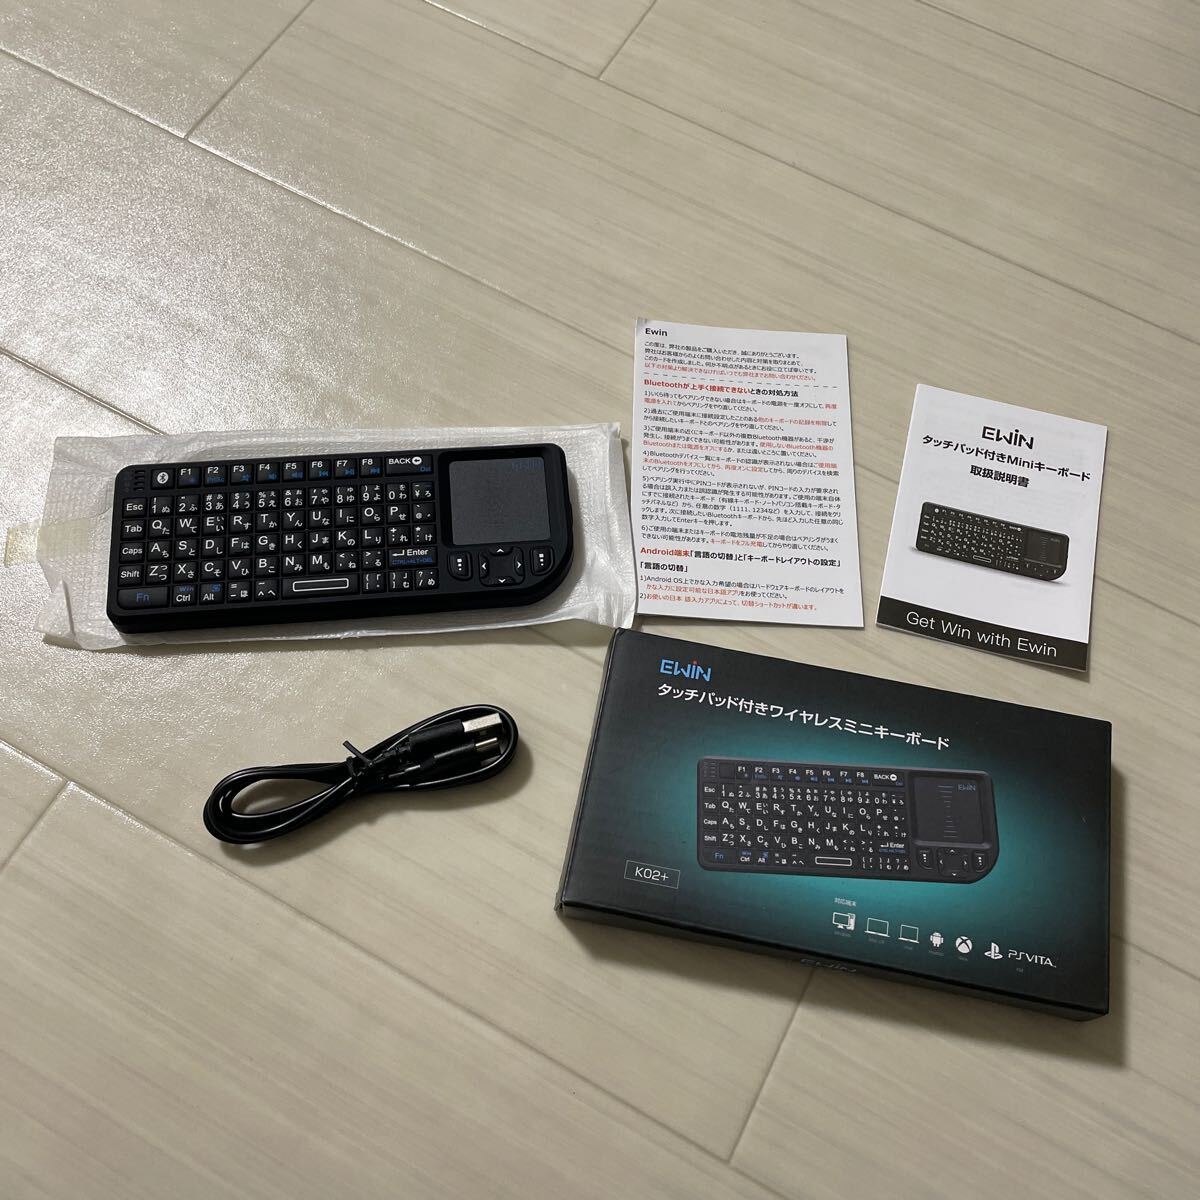 Ewin ミニ キーボード ワイヤレス 2.4GHz タッチパッド搭載 超小型 mini Wireless keyboard マウス一体型 キーボード 日本語JIS配列 無線 の画像1